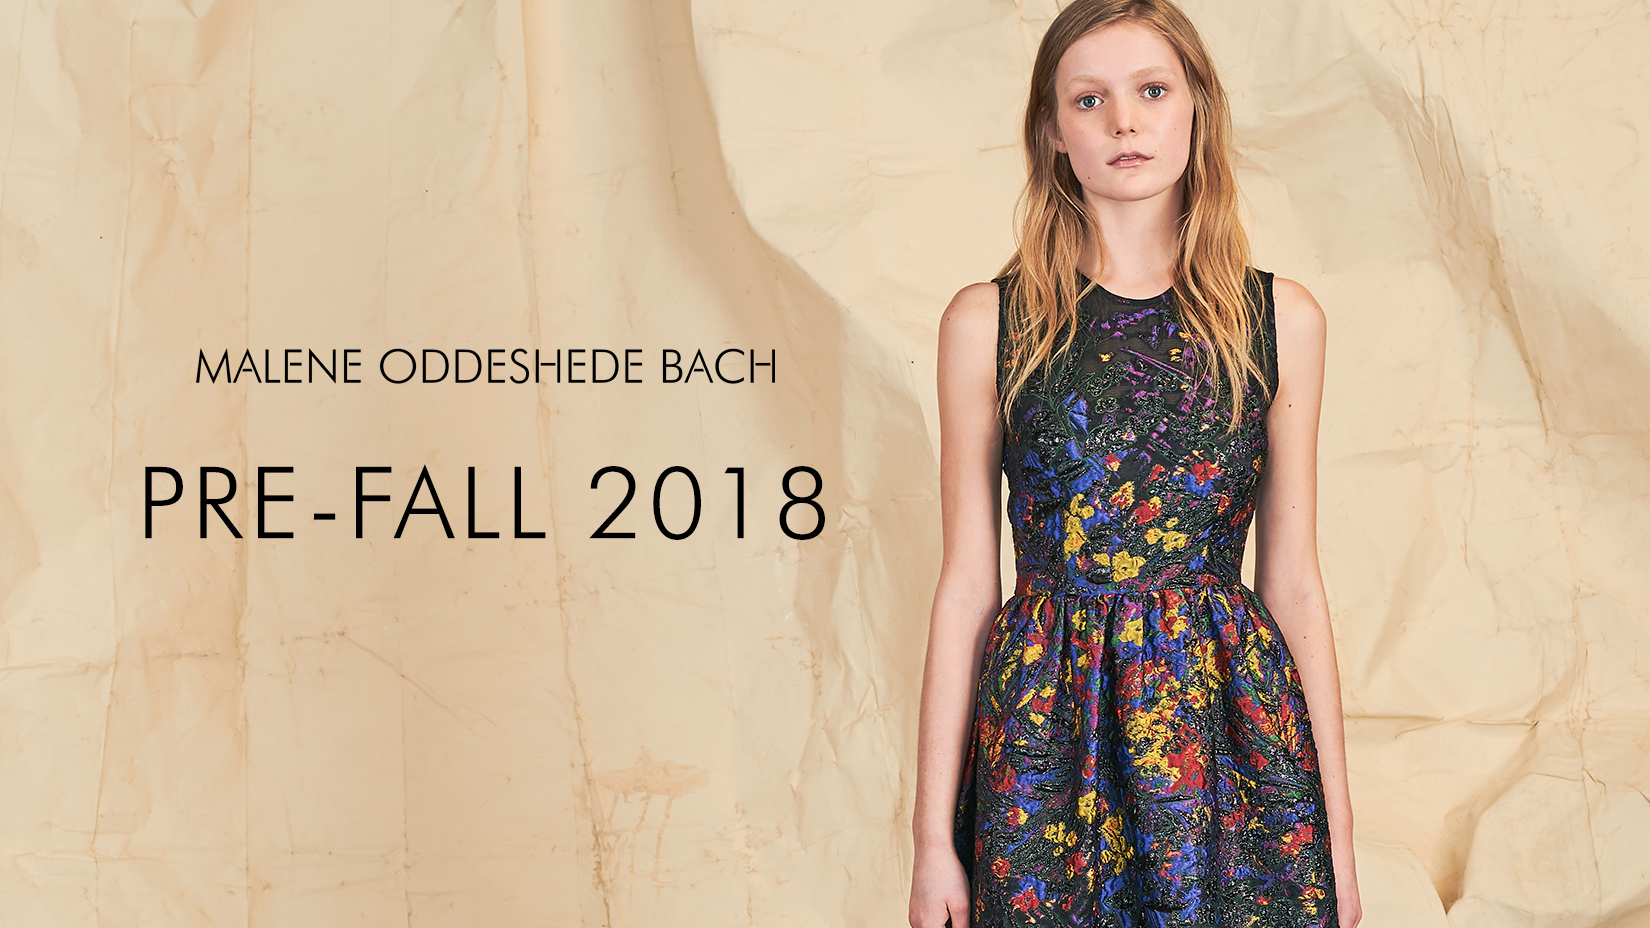 Pre-fall 2018 – Malene Oddershede Bach